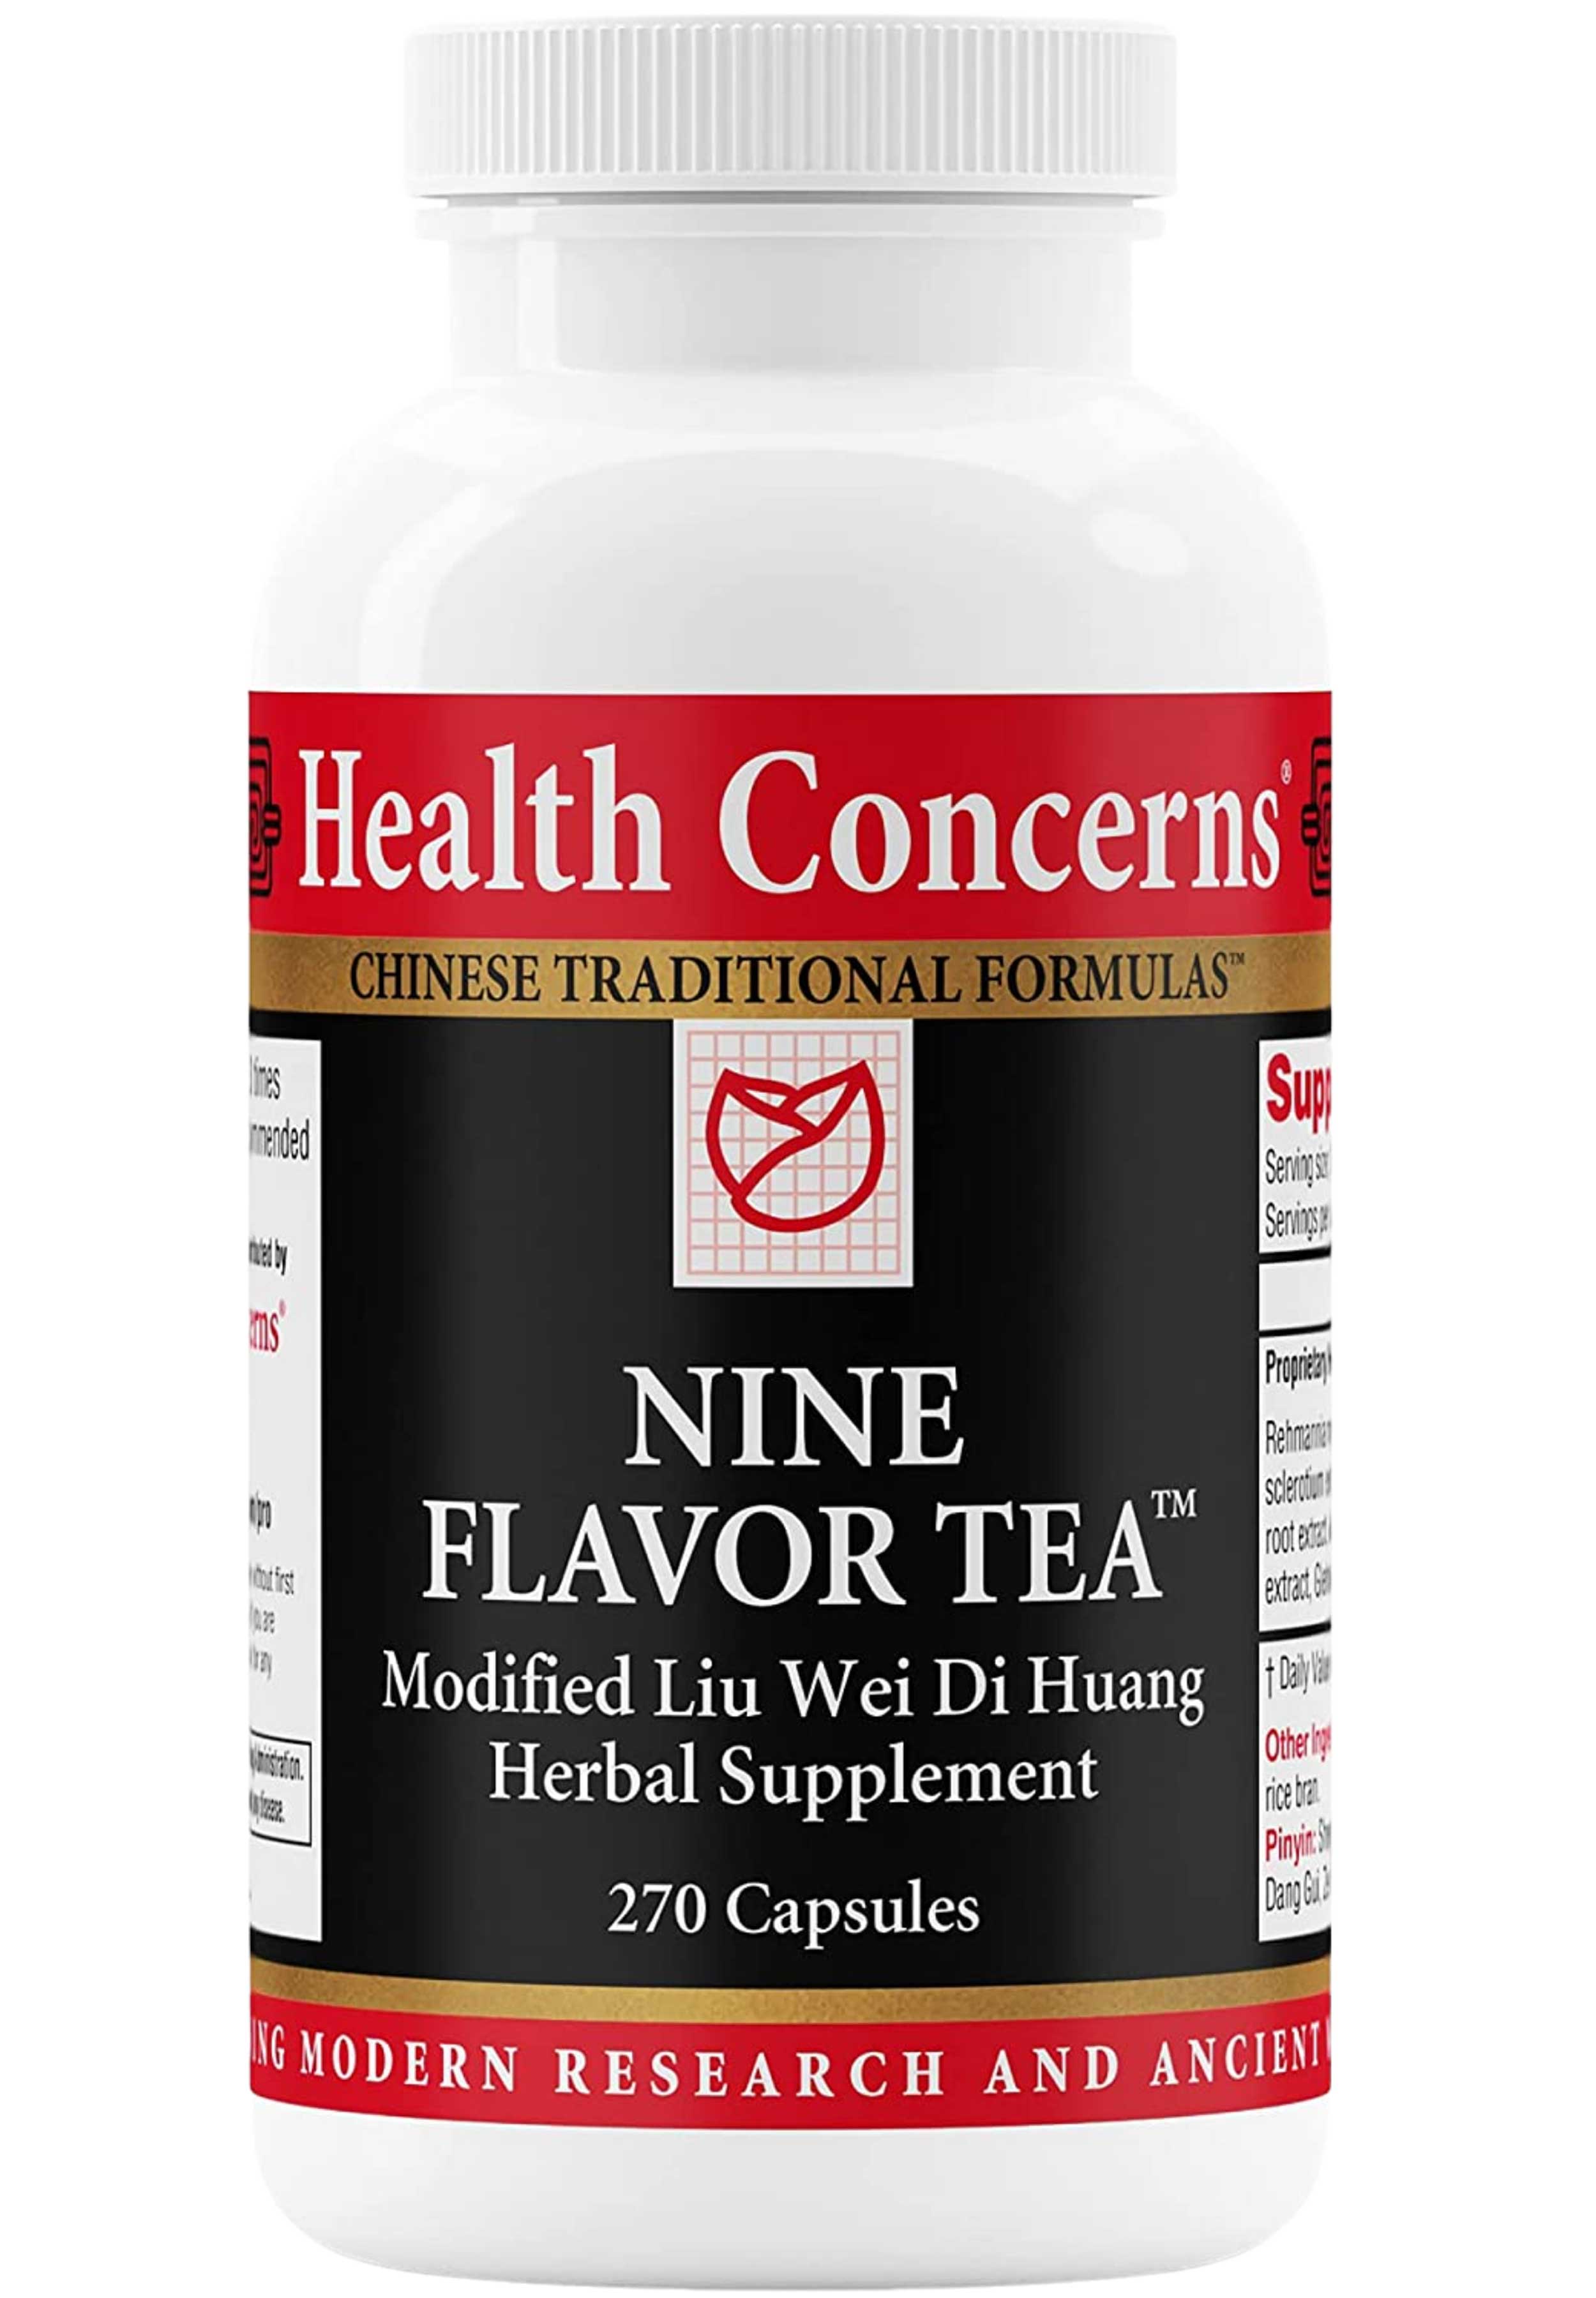 Health Concerns Nine Flavor Tea